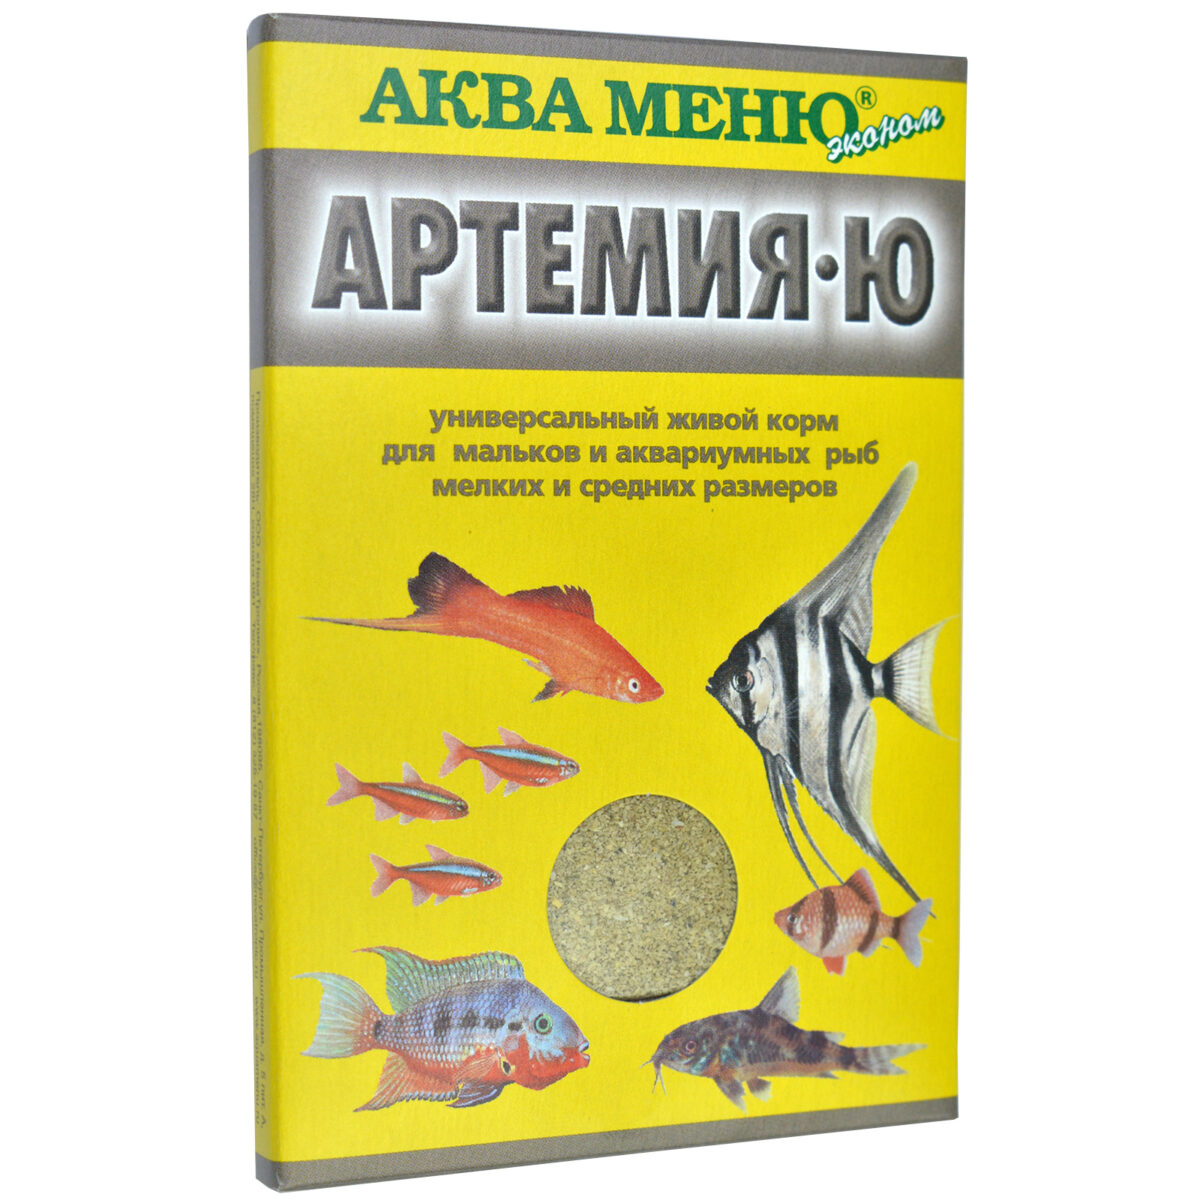 АКВА МЕНЮ, Корм д/рыб "Артемия-Ю", 30 гр.